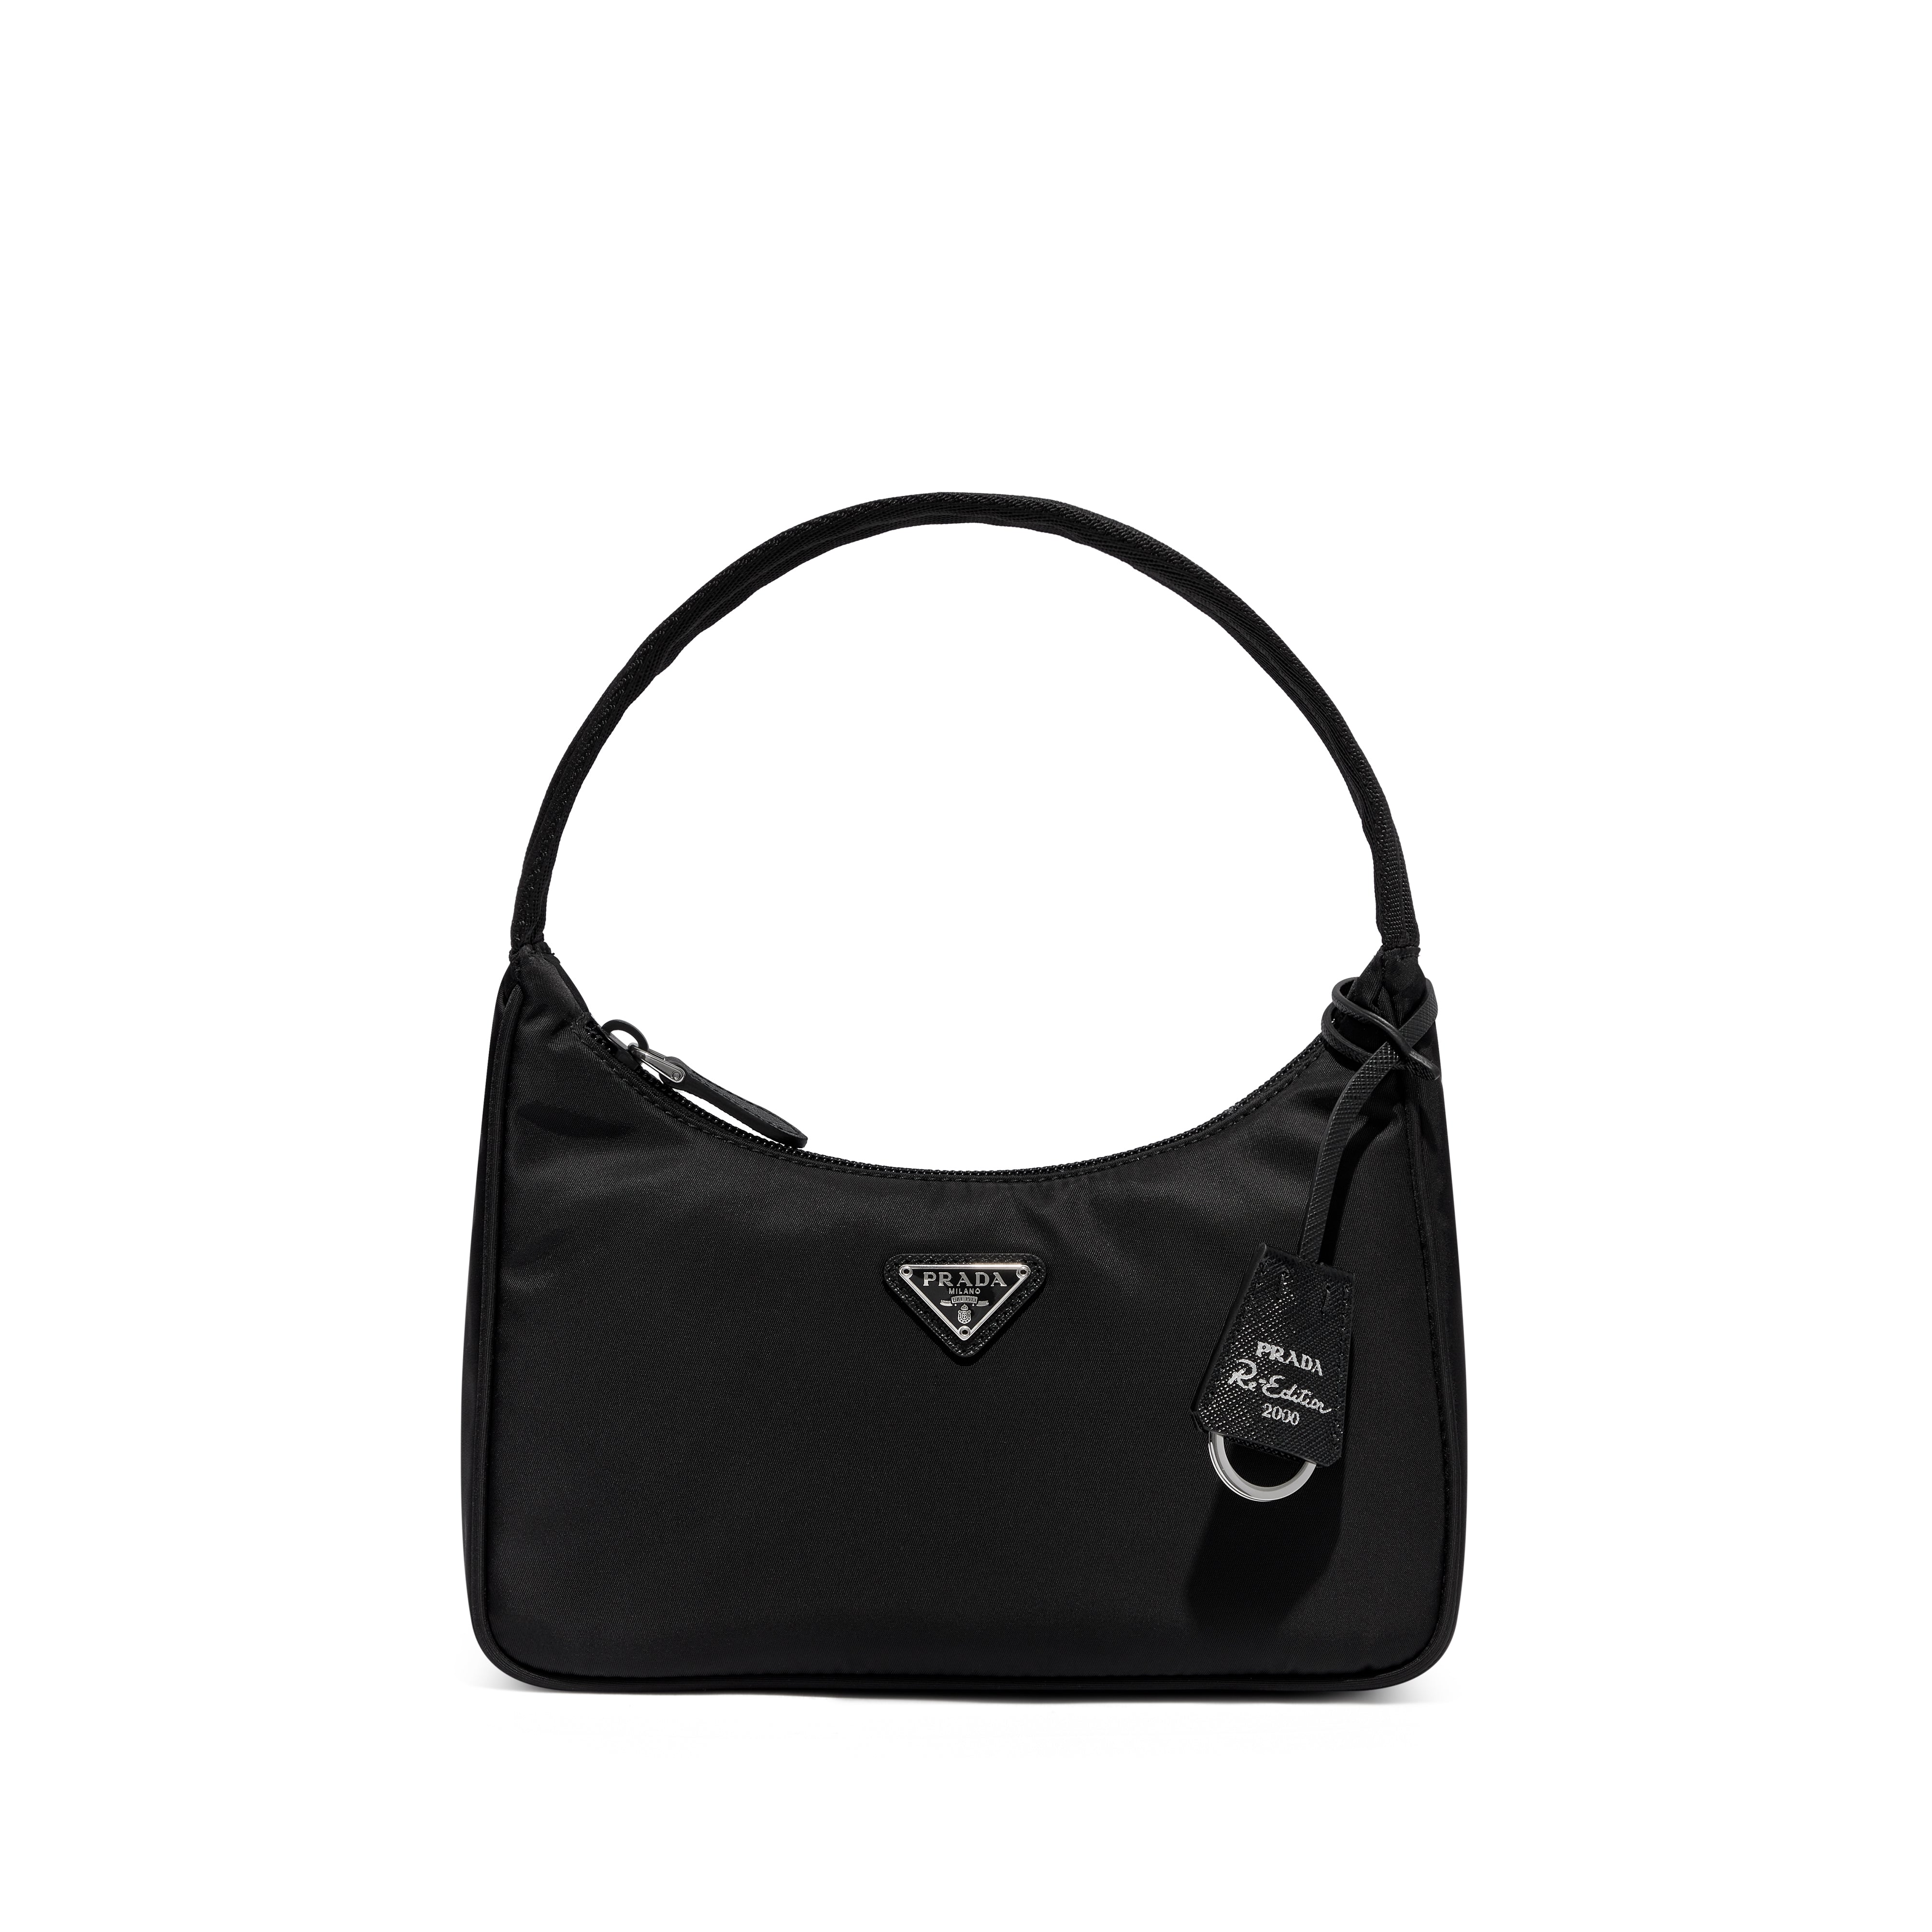 Saffiano Leather Prada Identity Shoulder Bag Women Slate Gray - Fablle